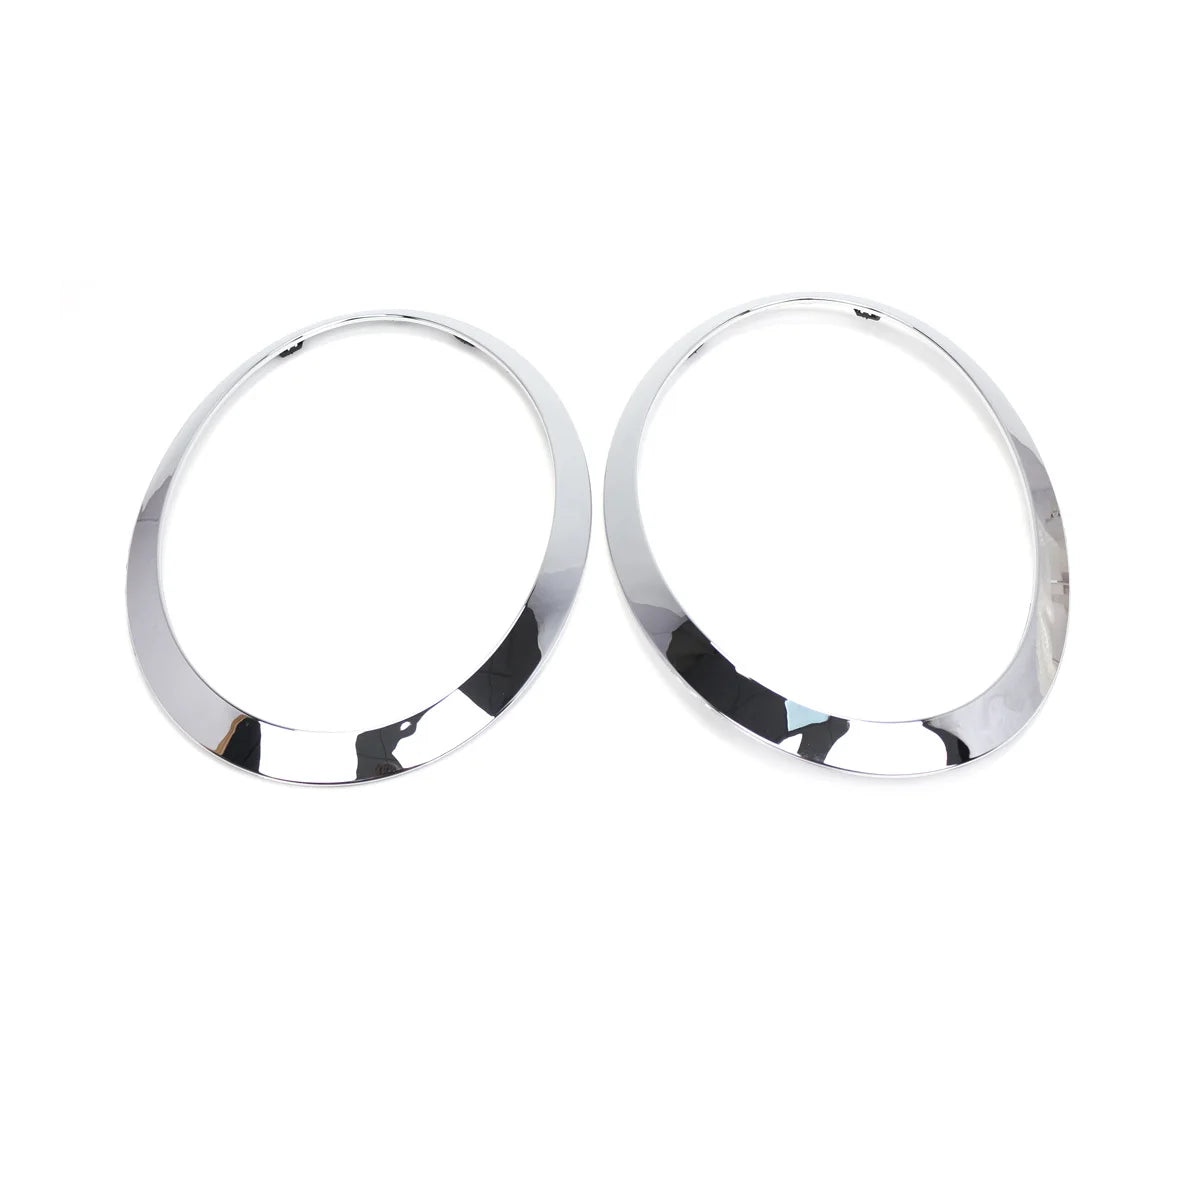 Headlight Ring Bezel Trim For BMW Mini Cooper F55 F56 F57 Gloss Black Taillight Ring Surround Cover Car Accessories